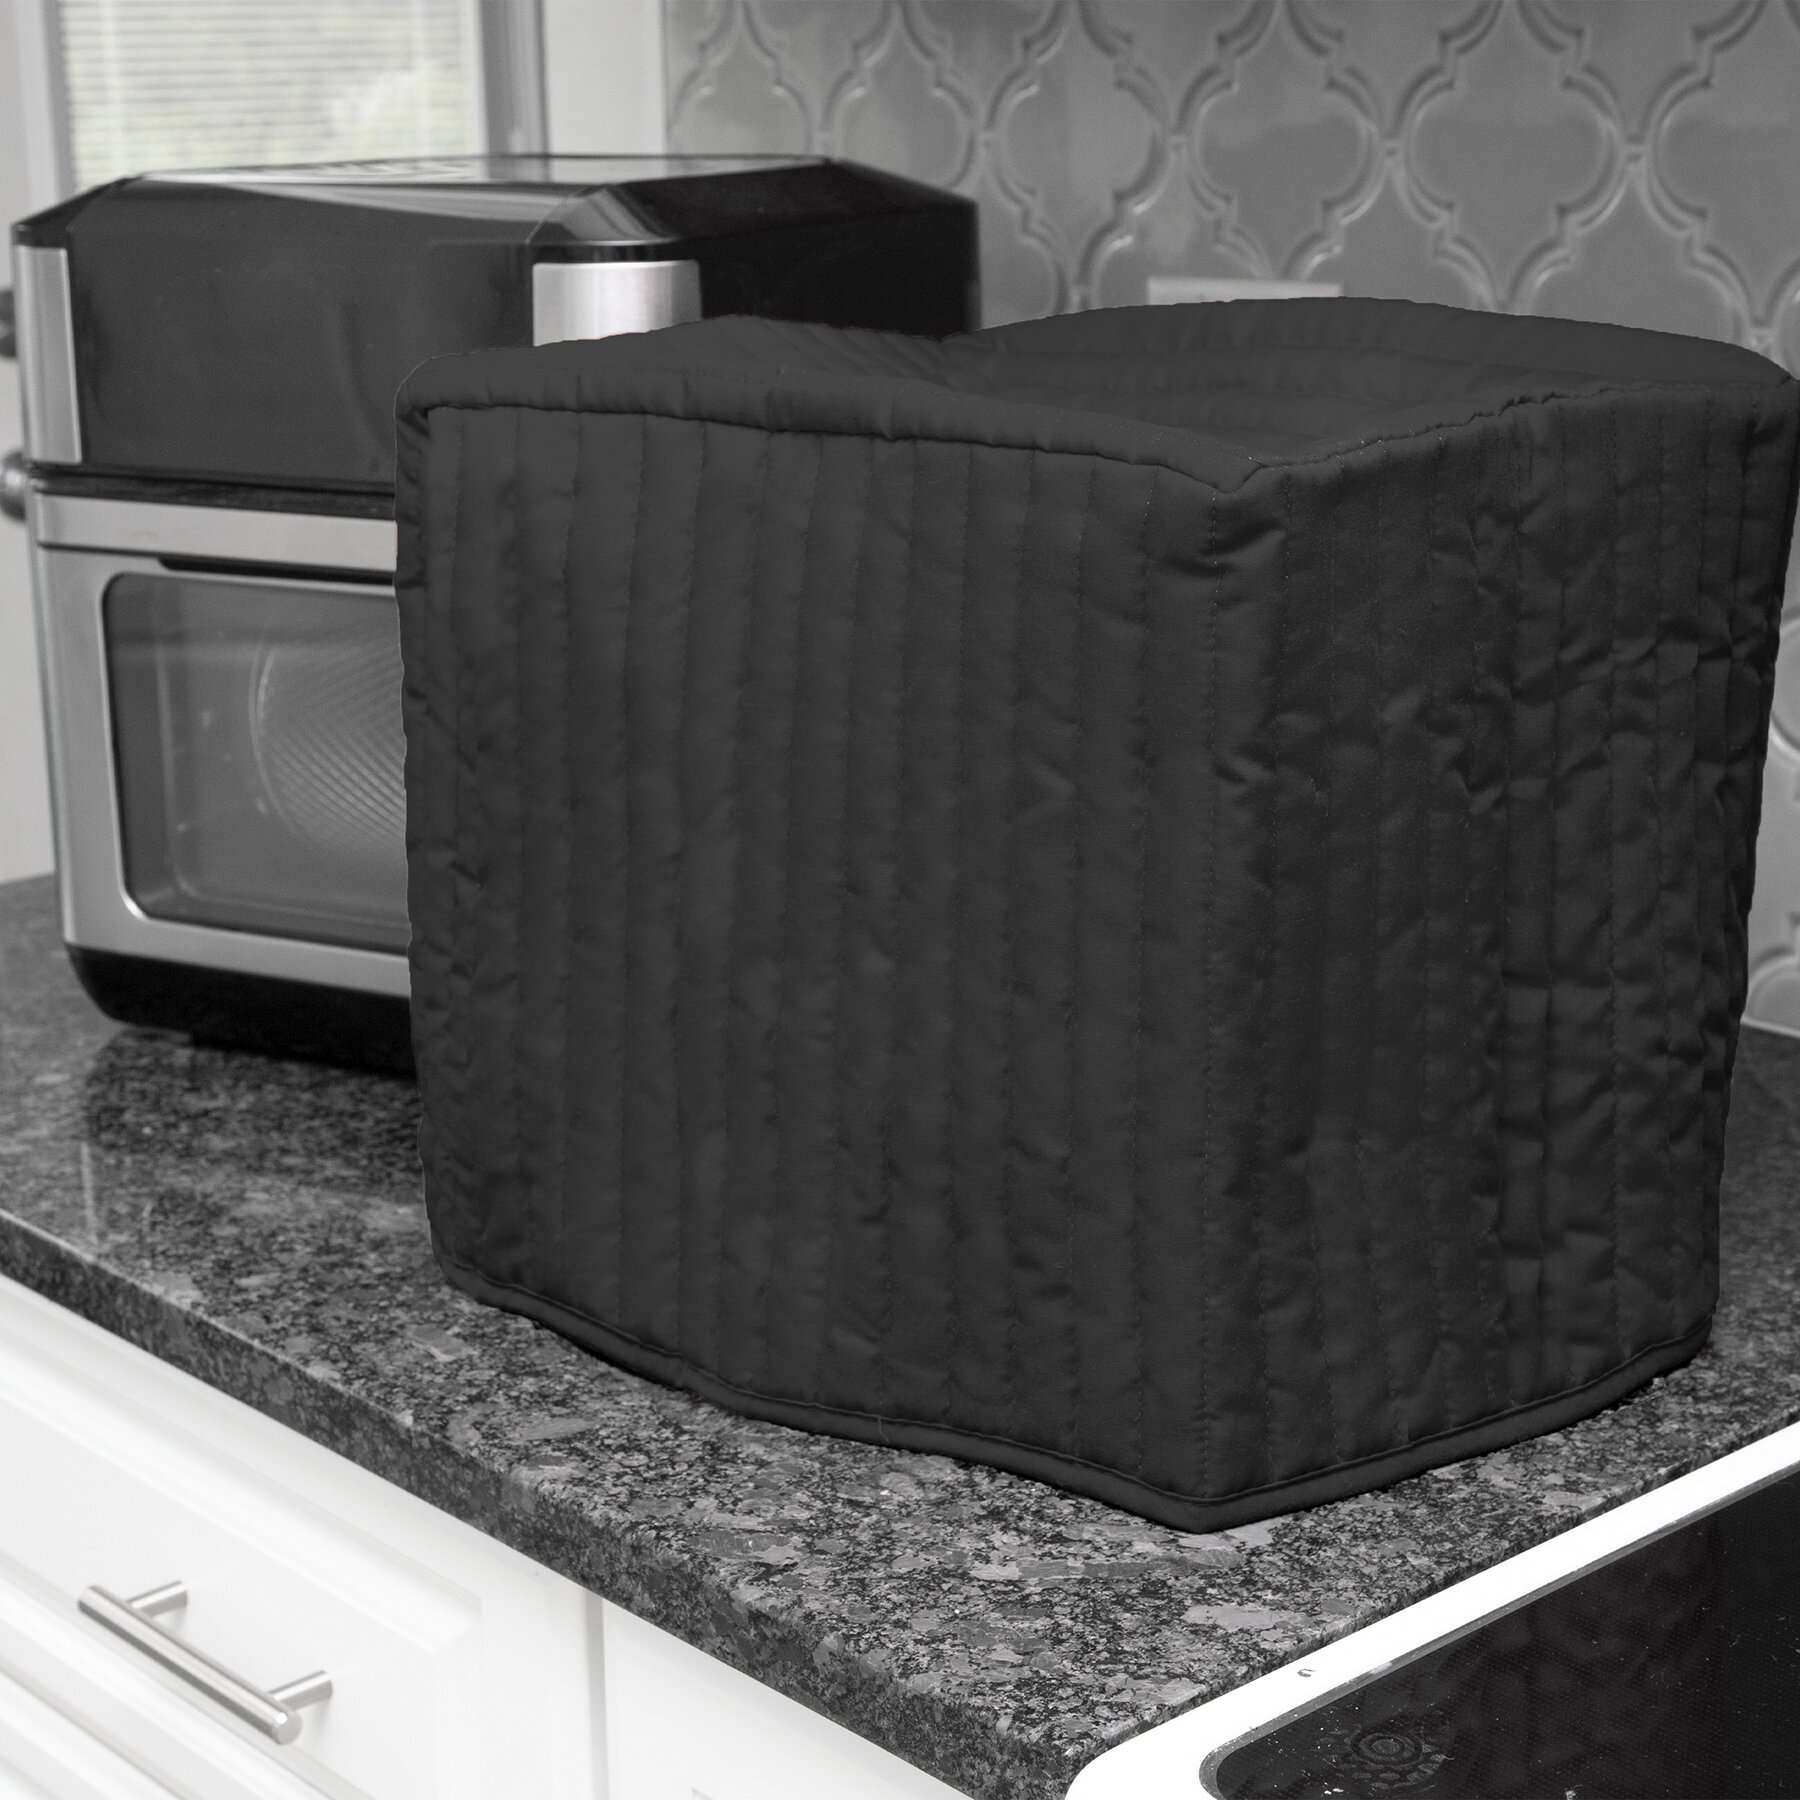 Ritz 5 Quart Air Fryer Appliance Cover, Black